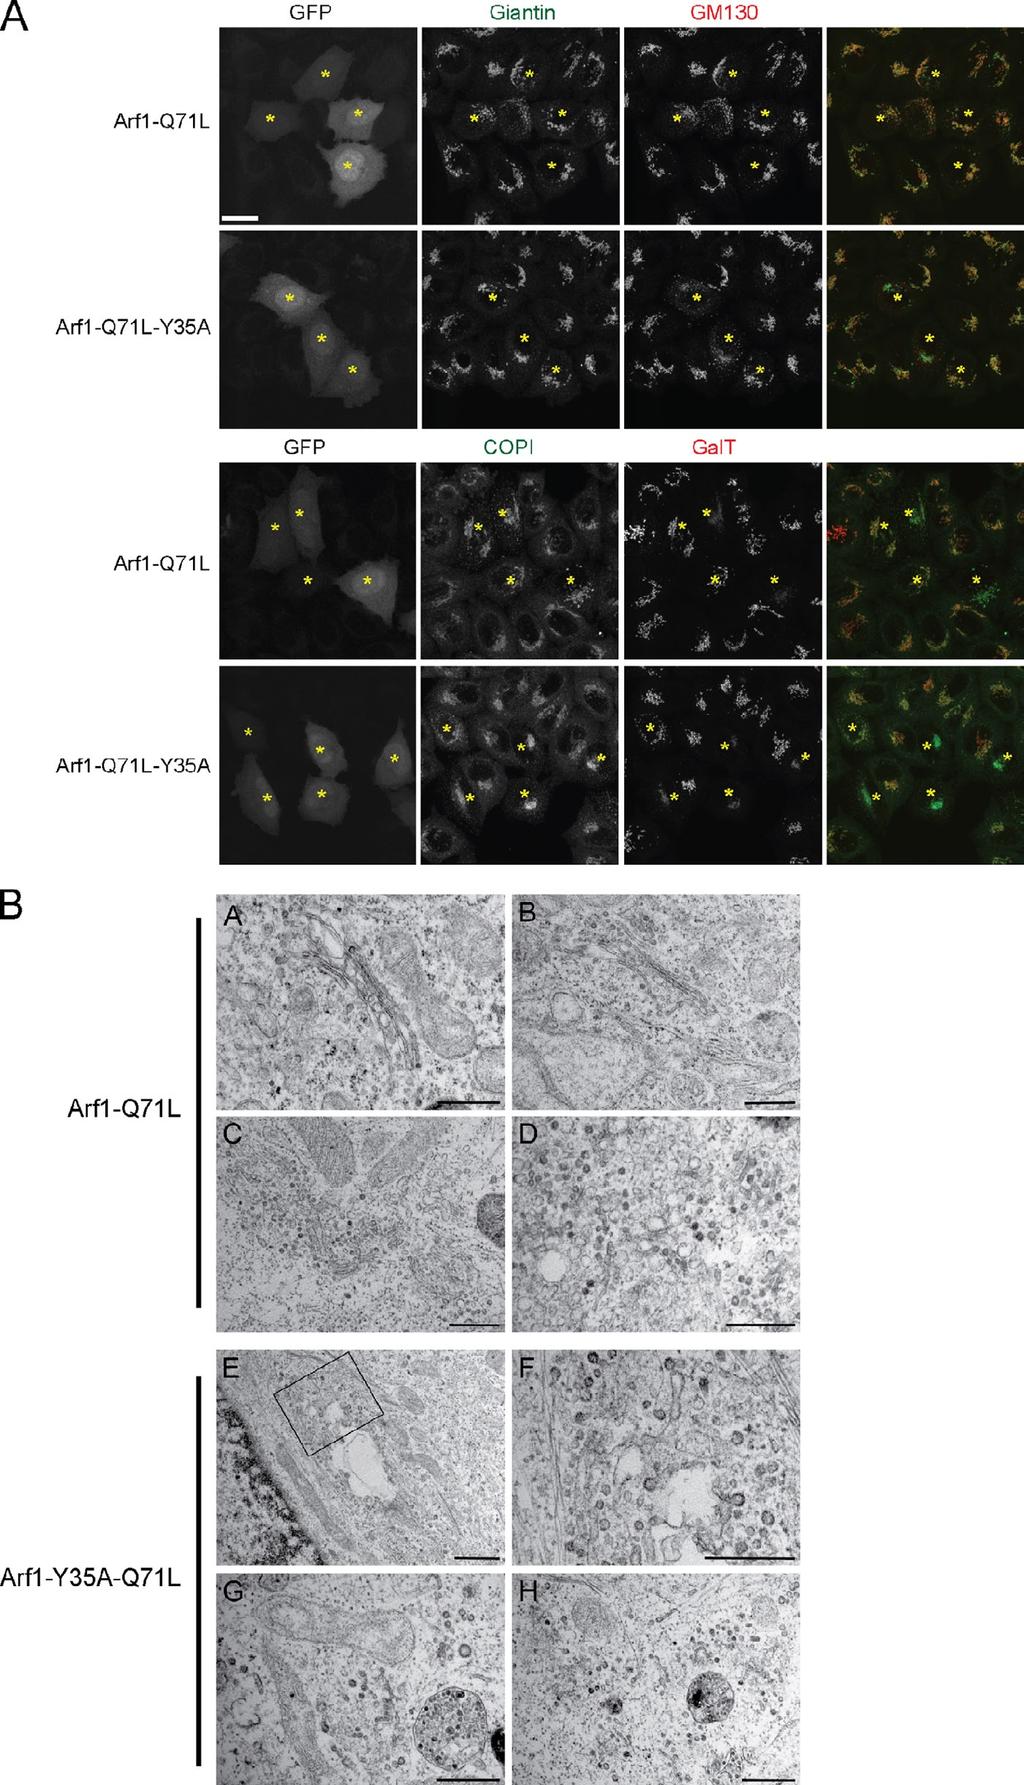 Figure S5. In vivo analysis of dominant-negative Arf1-Q71L or Arf1-Y35A-Q71L in HeLa cells by single-cell thin-section EM and immunofluorescence microscopy.